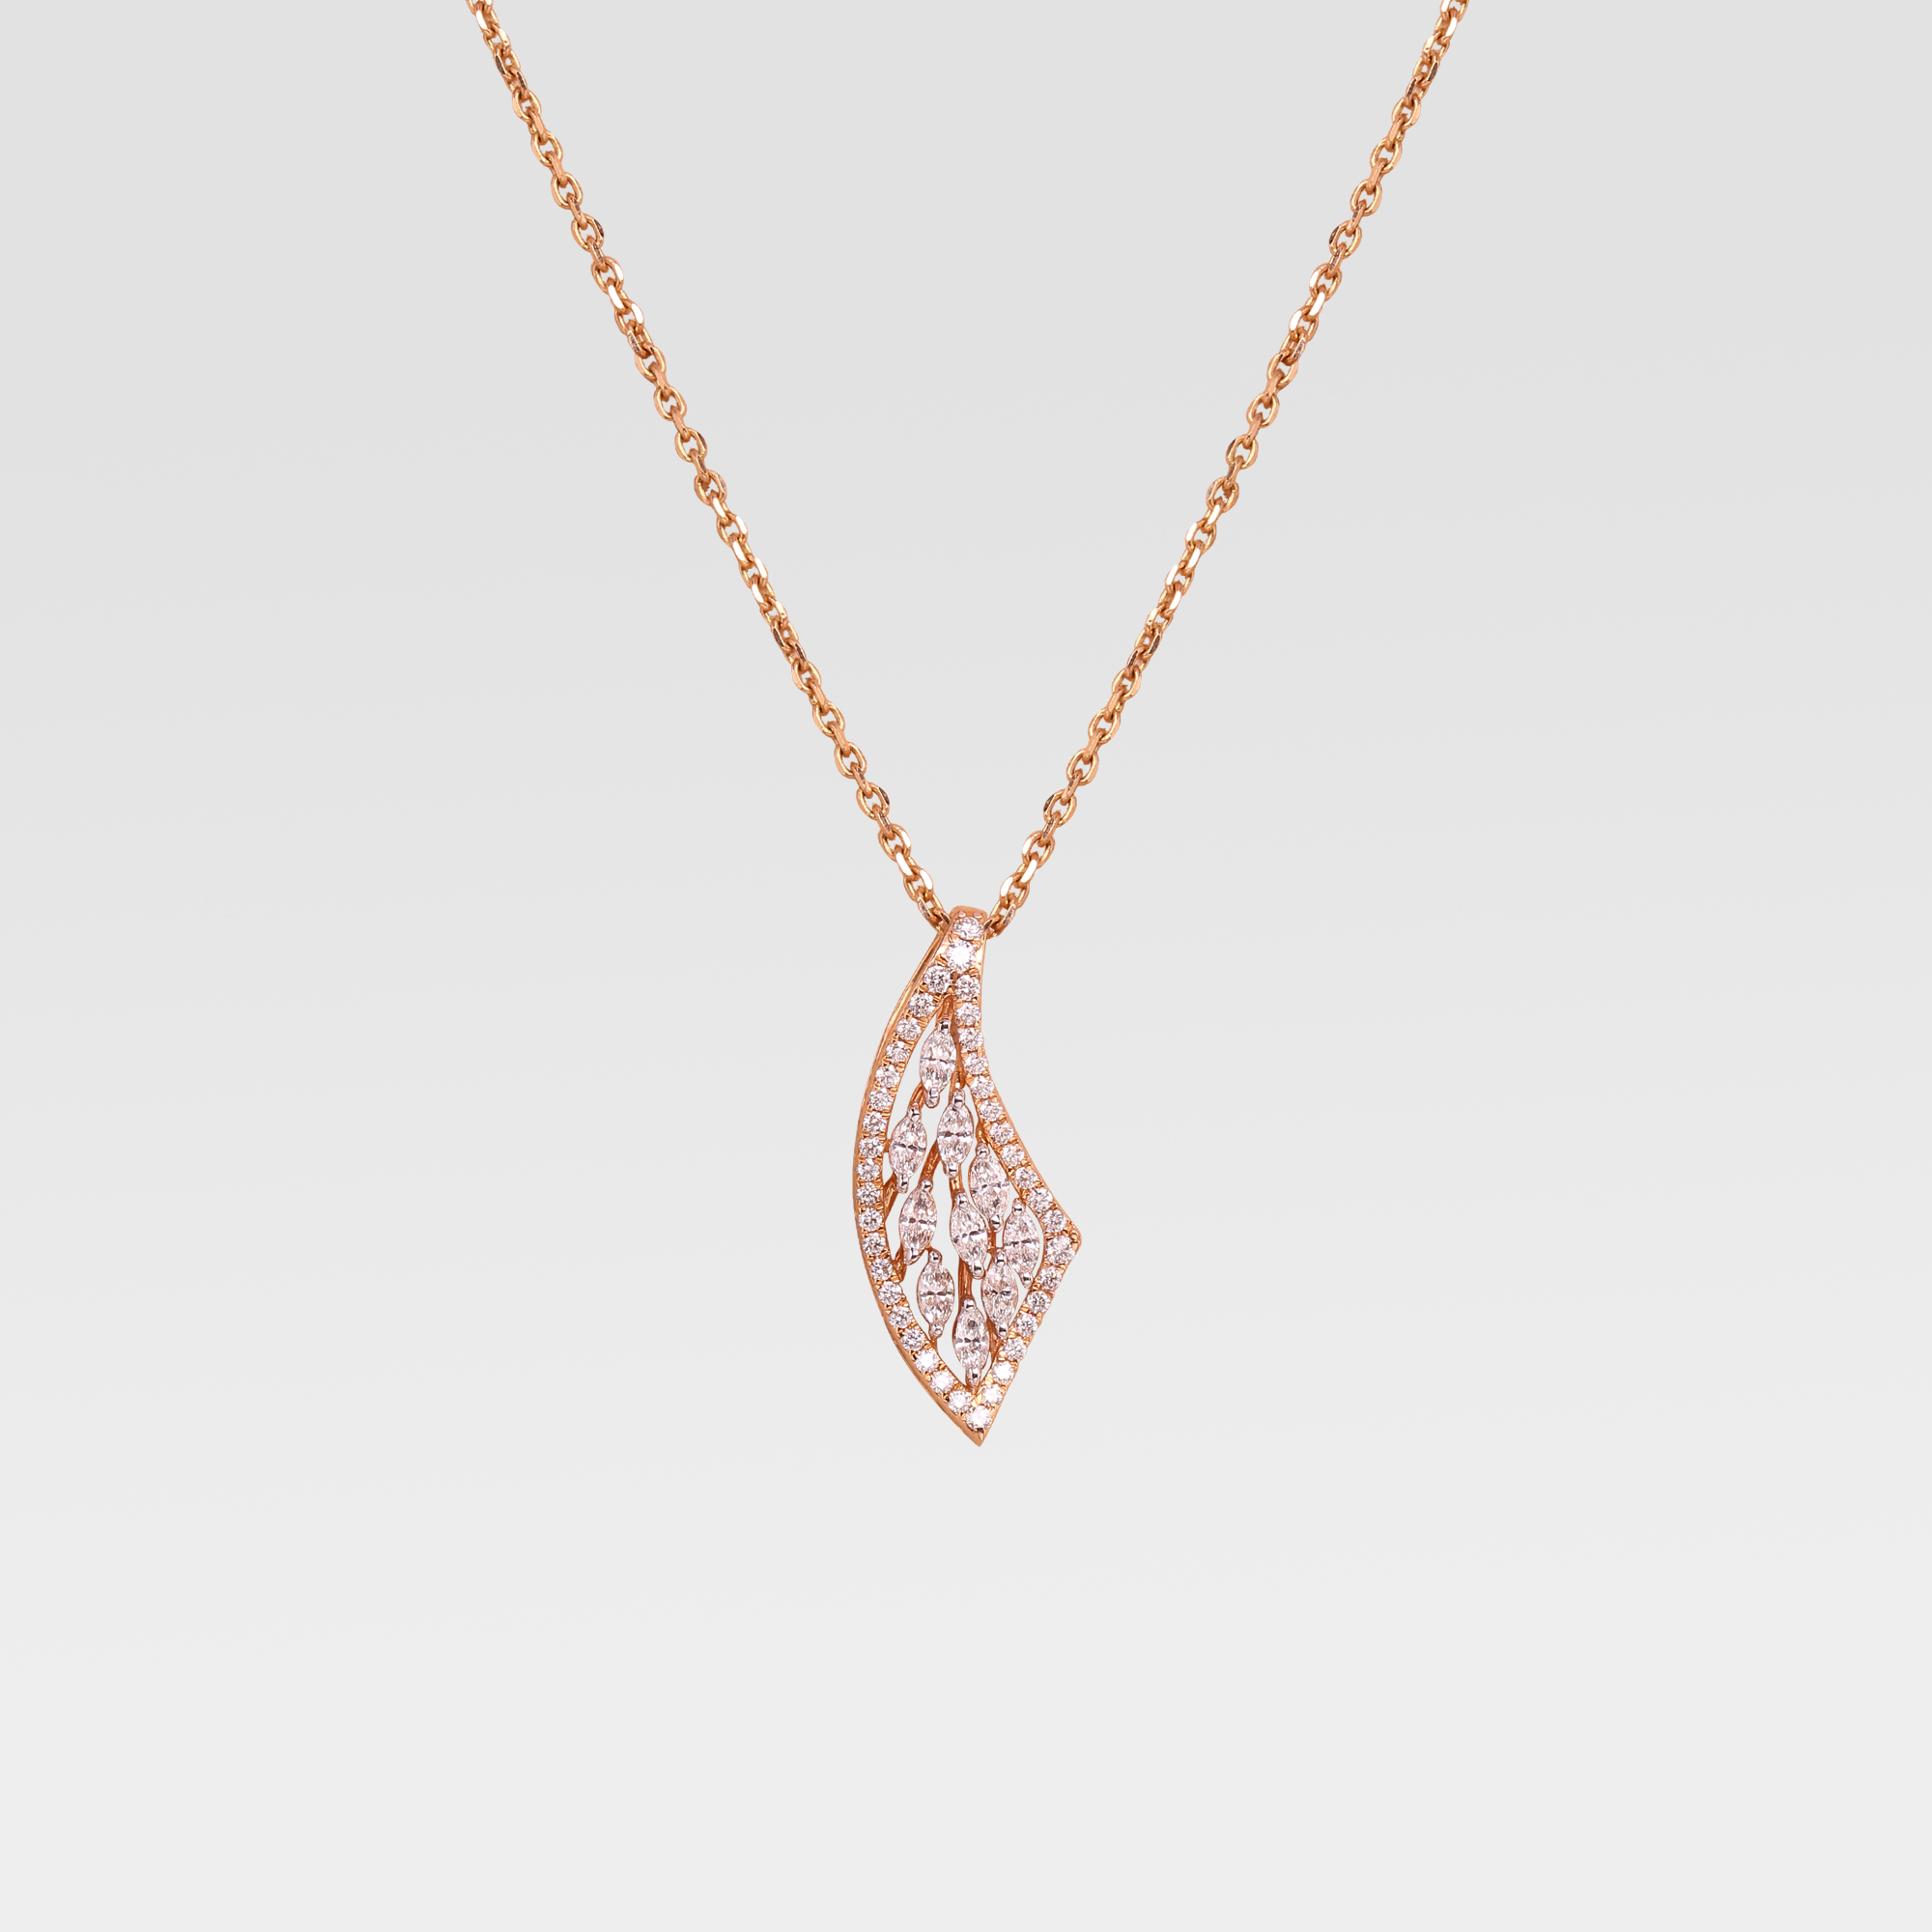 classic diamond necklace